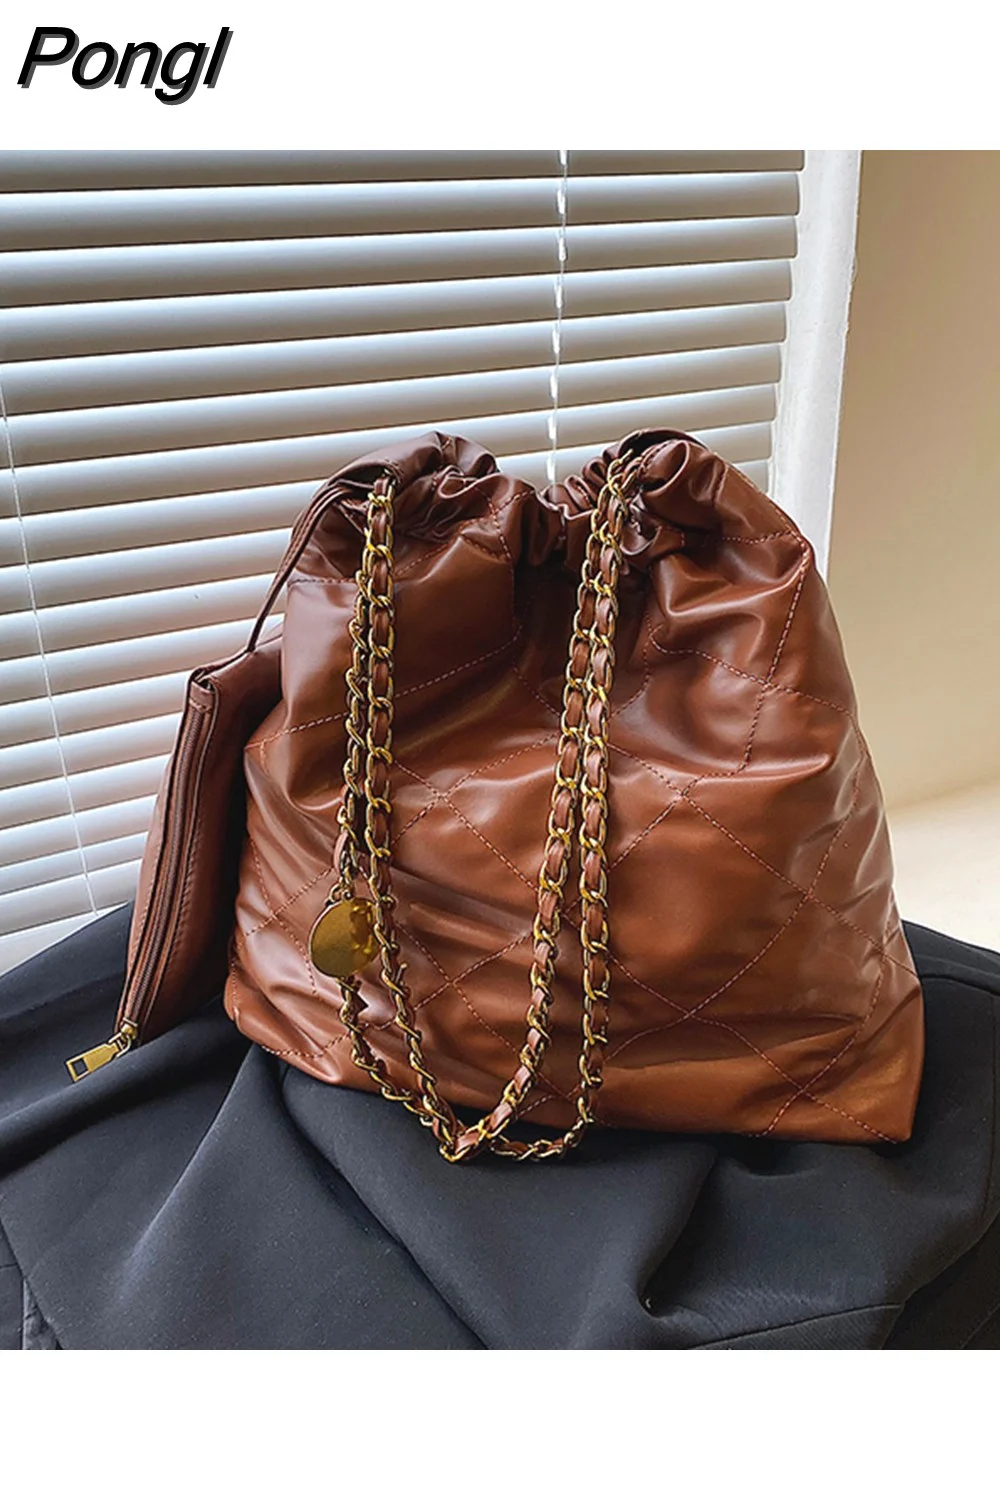 Pongl Women Bag Luxury Designer Handbag Large Capacity Composite Bag Female Shoulder Bags High Quality Fashion Pack Sac A Main Femme